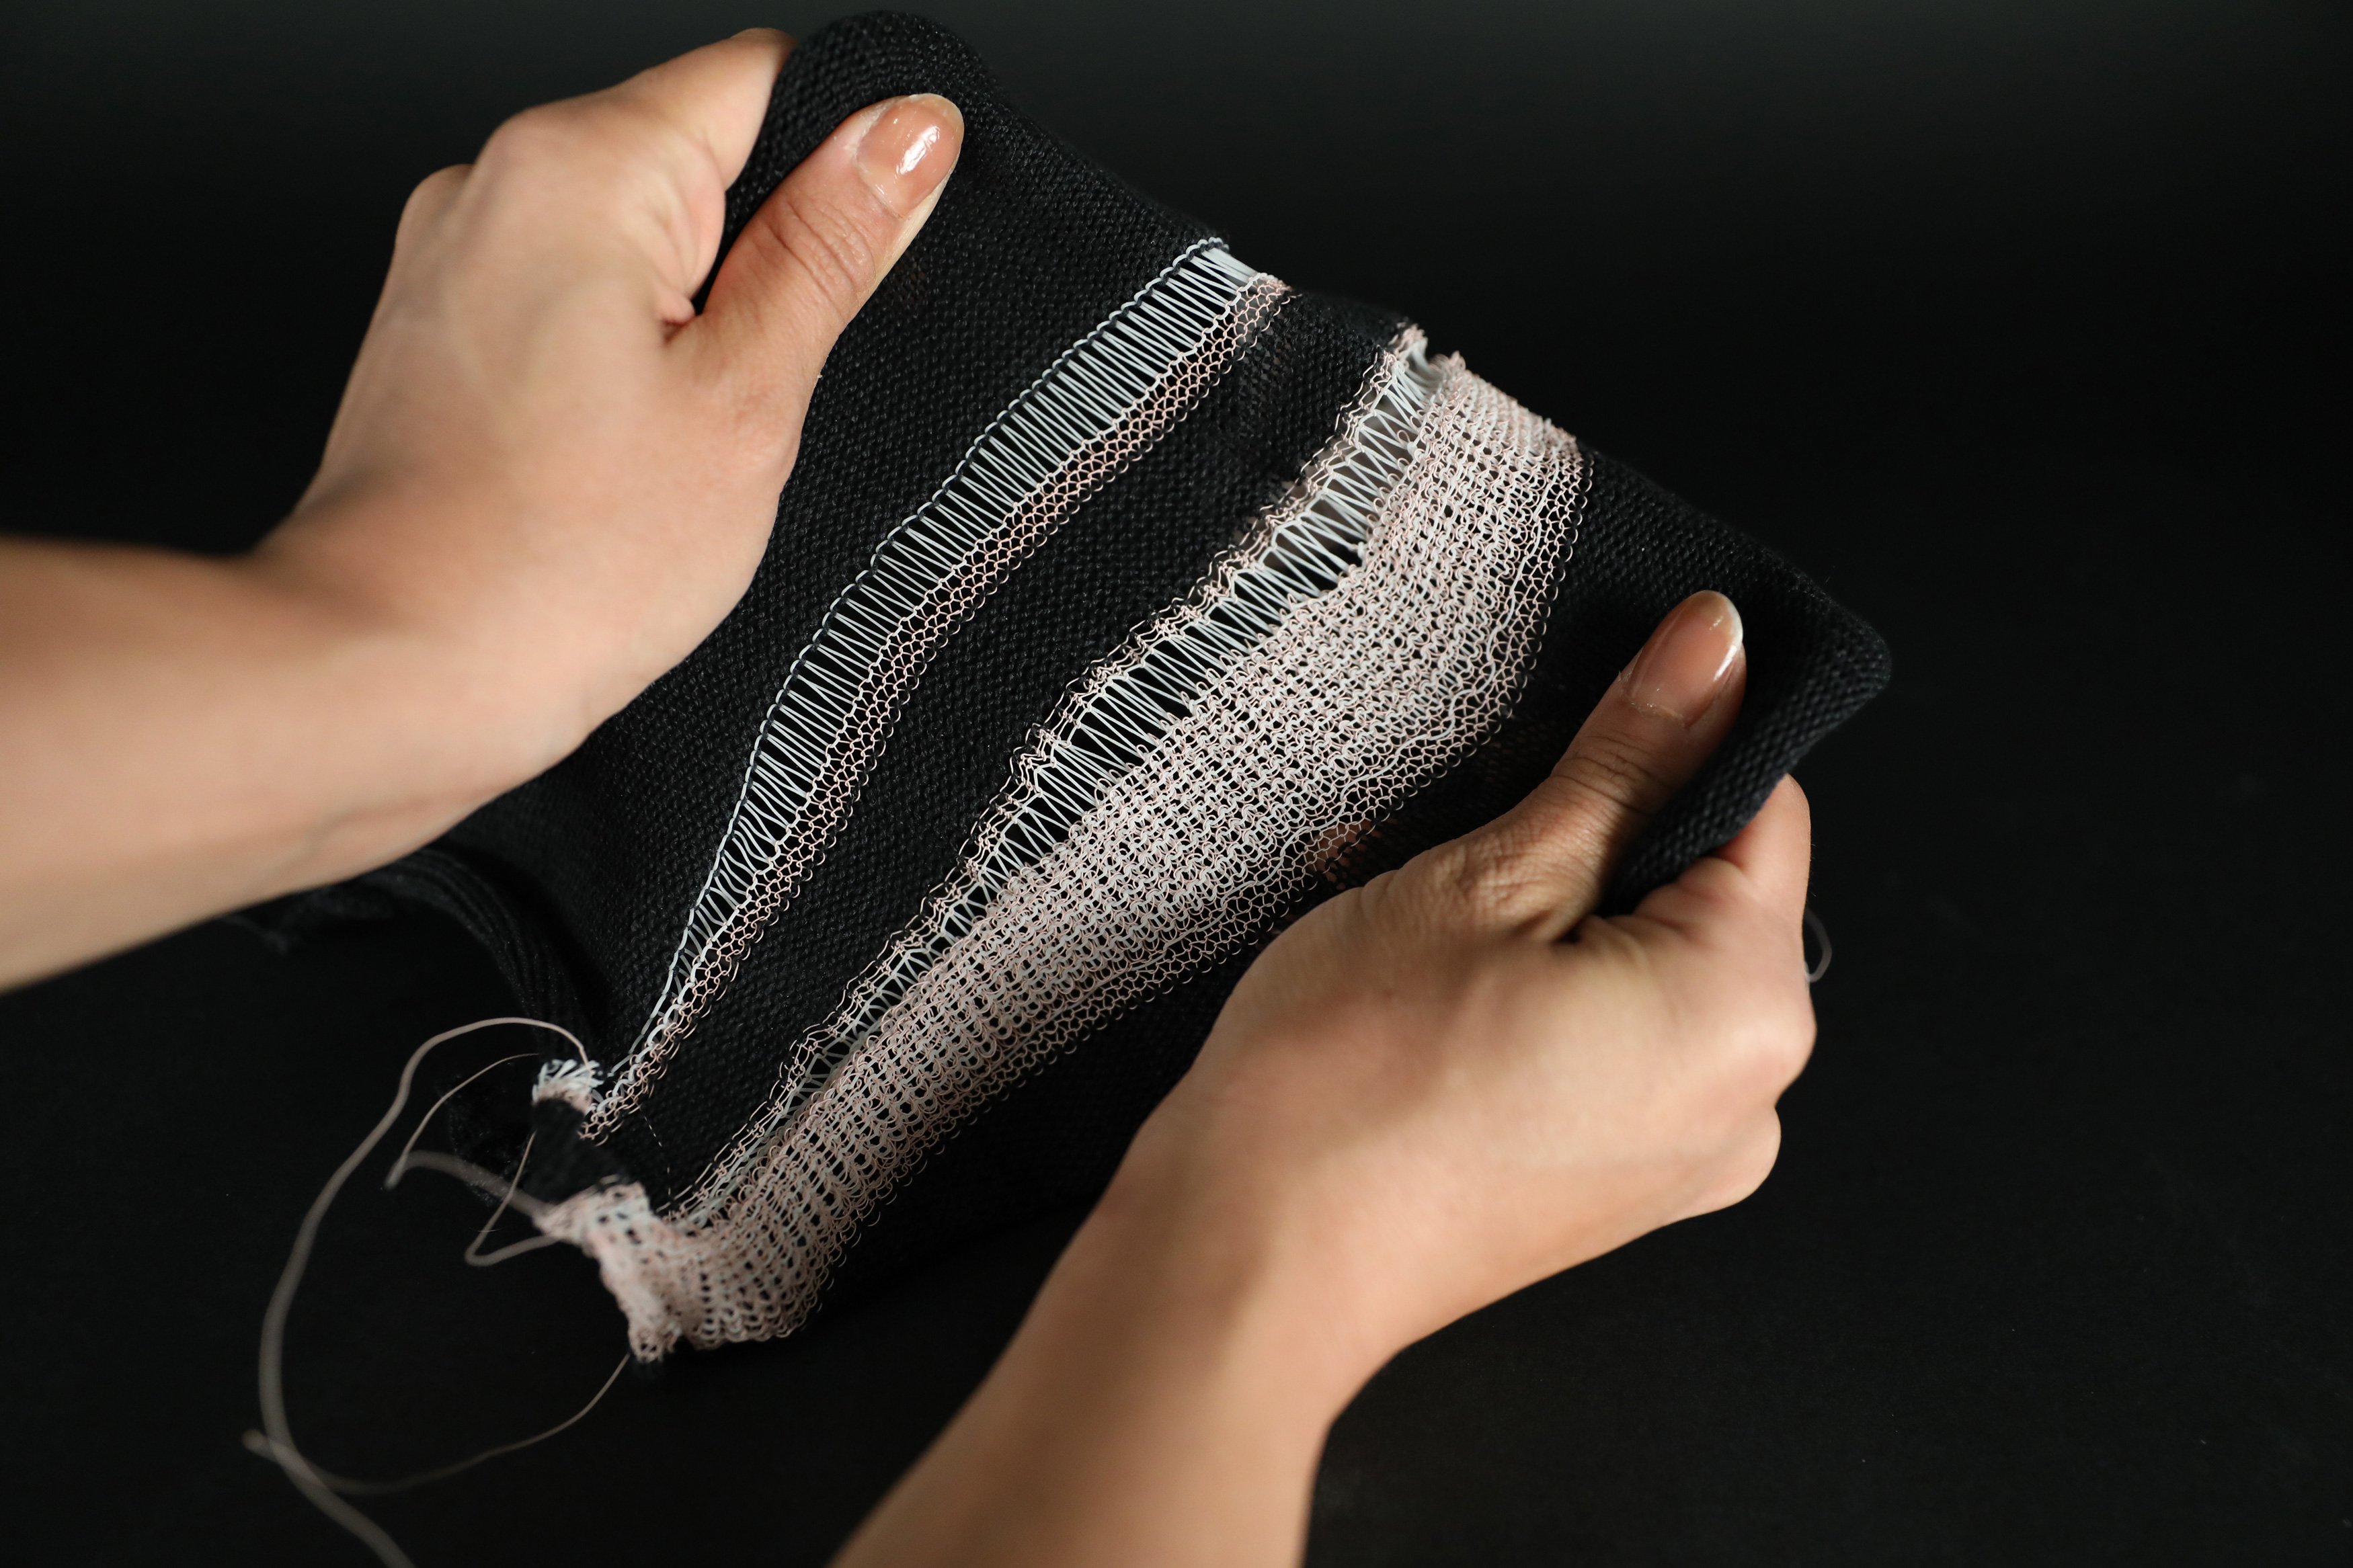 Shape-shifting fiber can produce morphing fabrics